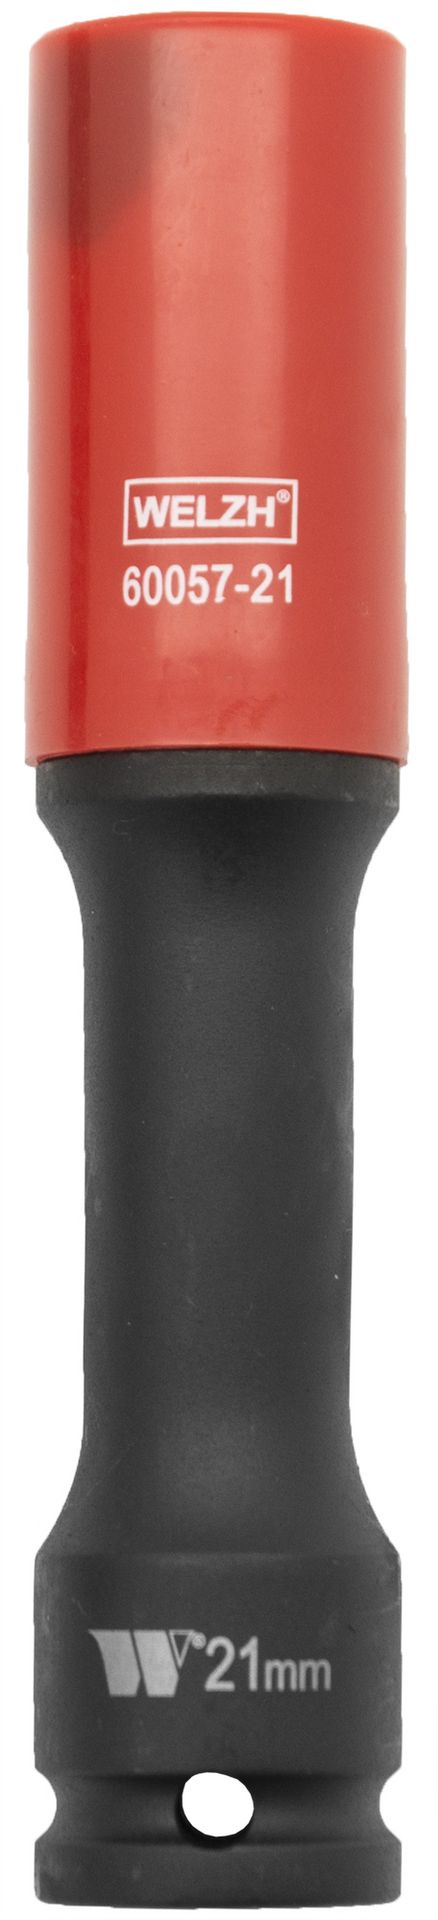 Welzh Werkzeug 1/2" Extra Long Protective Impact Socket Set For Alloy Wheels, 17, 19, 21mm